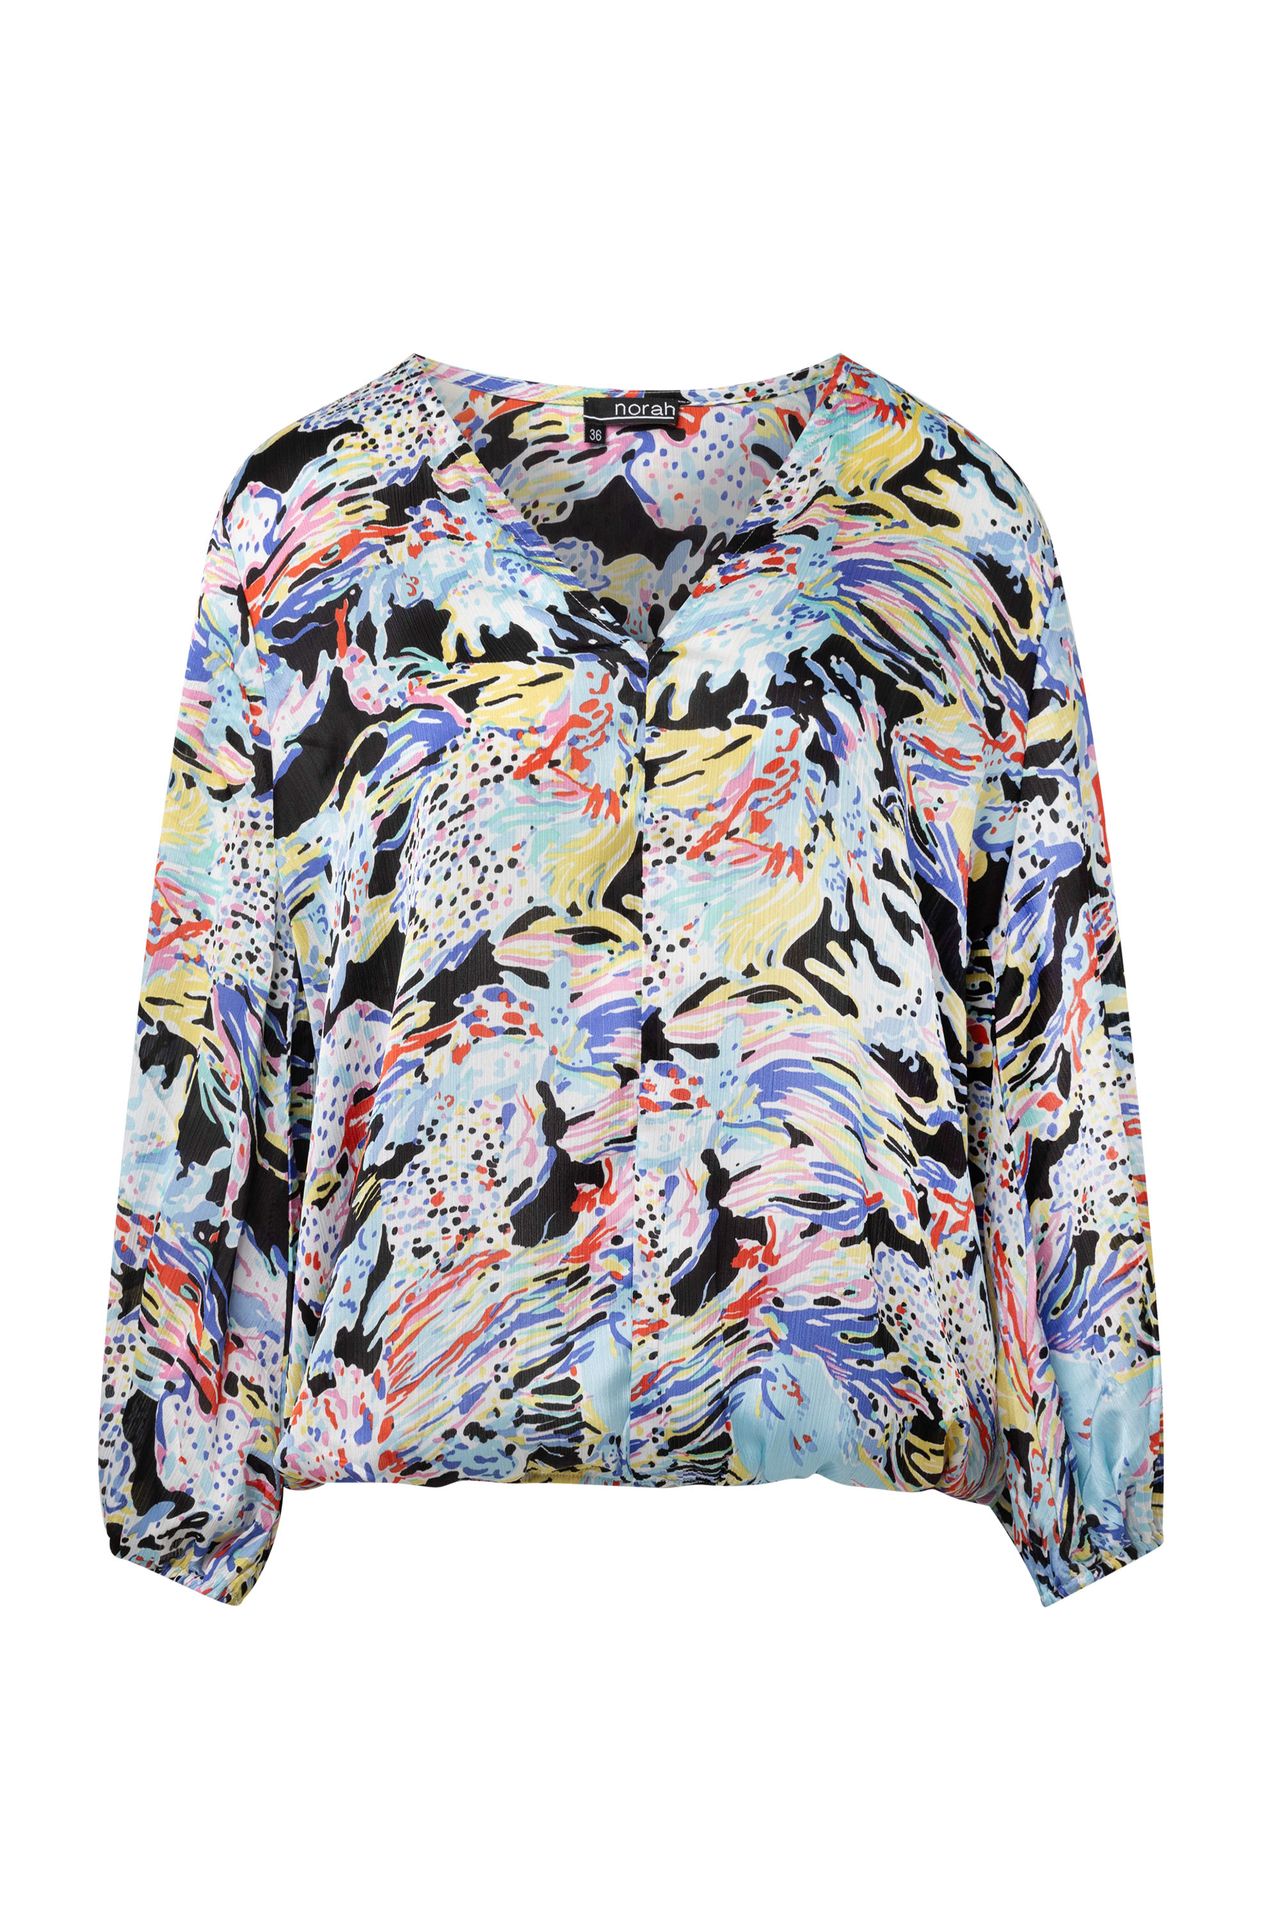 Norah Meerkleurige blouse multicolor 214683-002